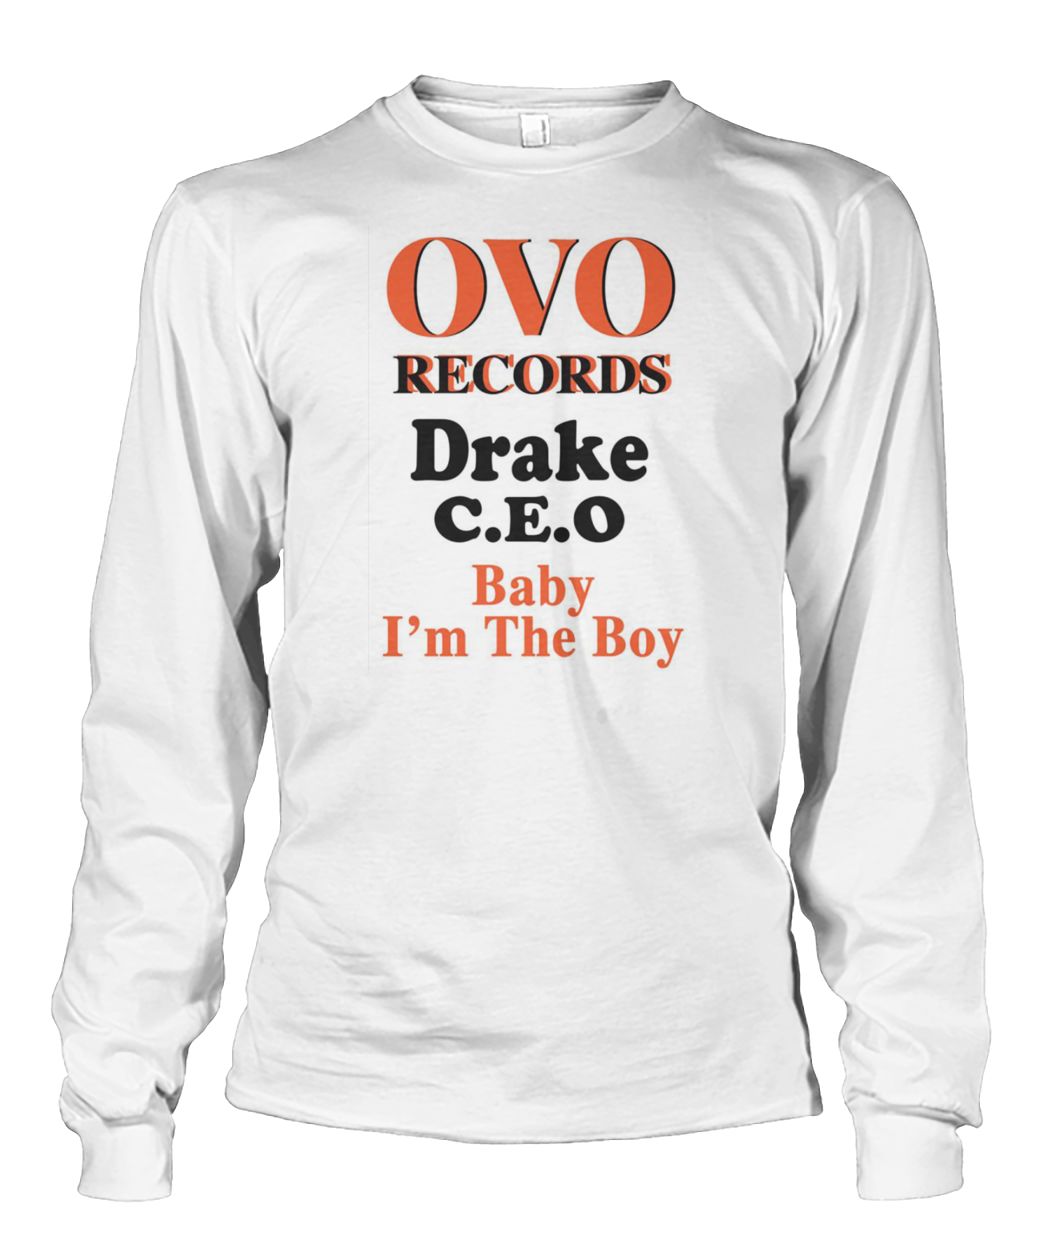 OVO records drake CEO baby I'm the boy unisex long sleeve